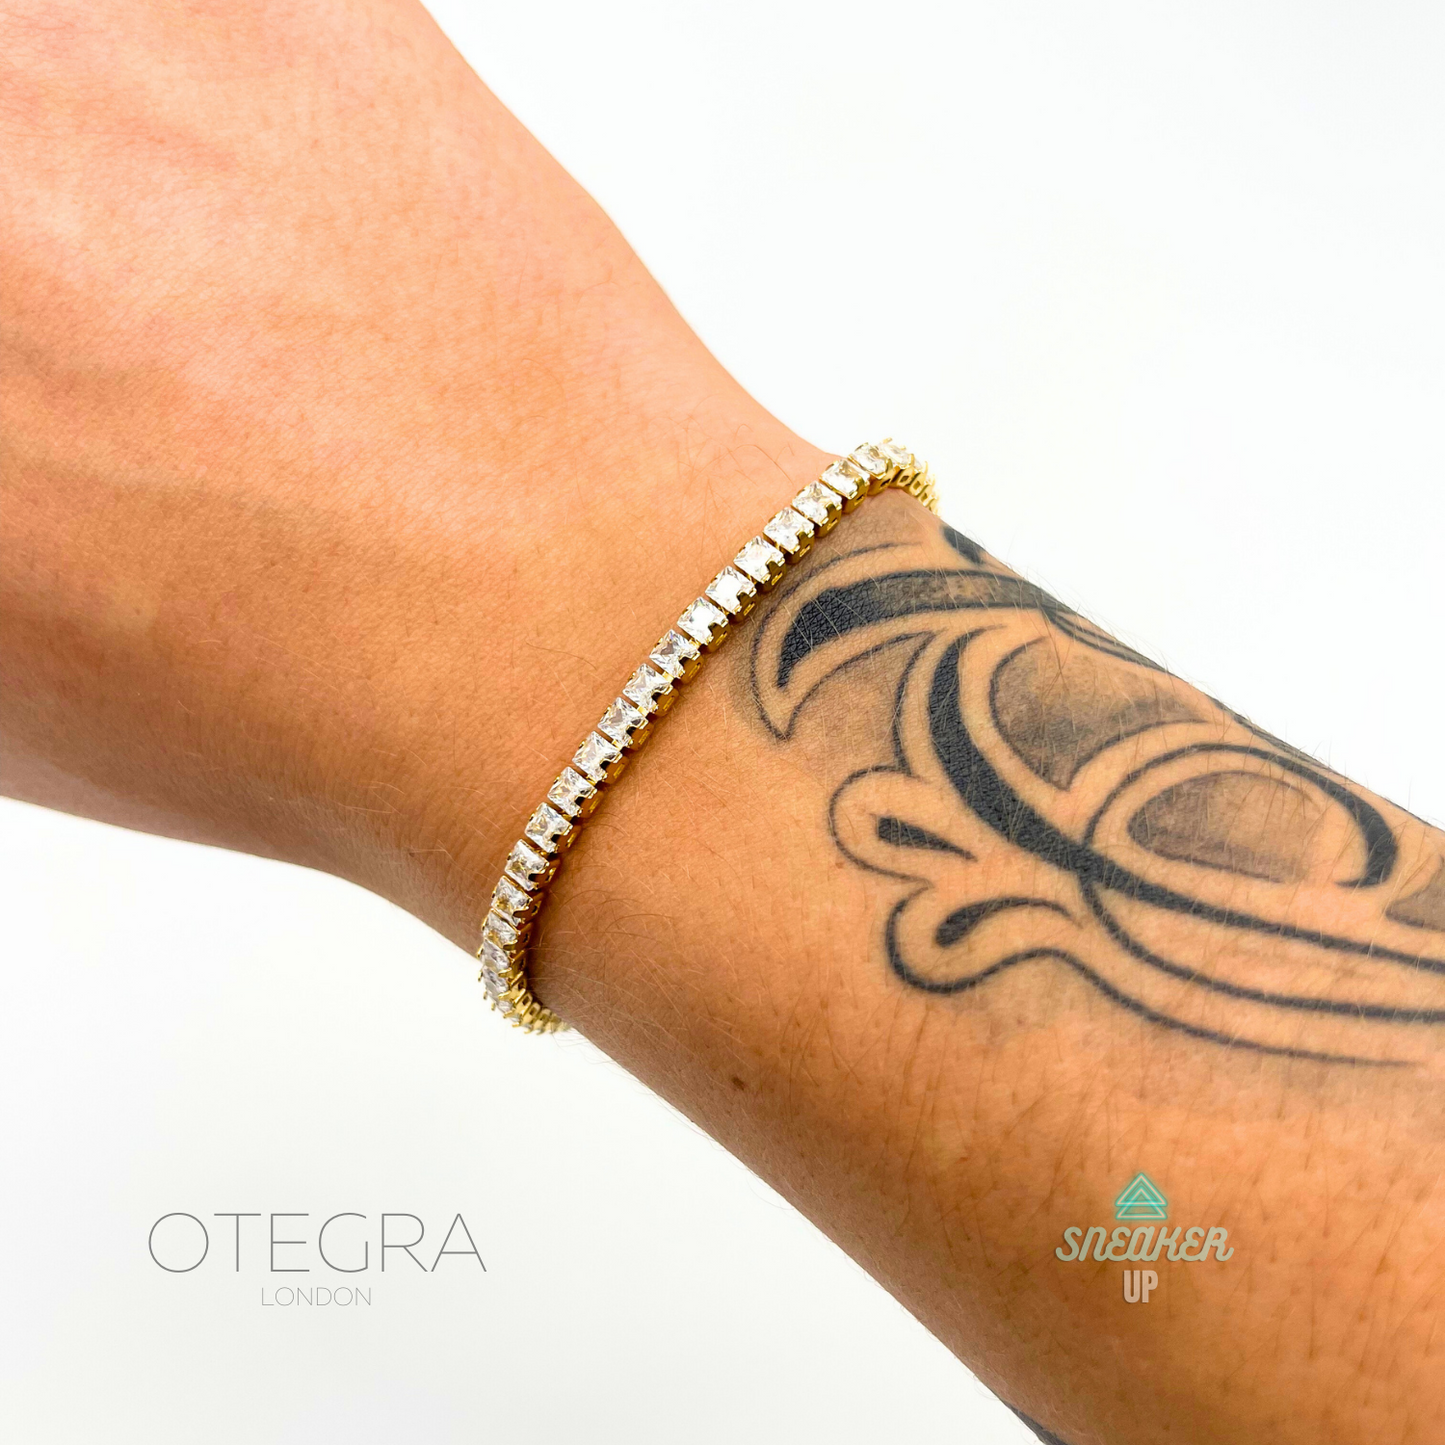 OTEGRA London 4mm Gold Tennis Bracelet